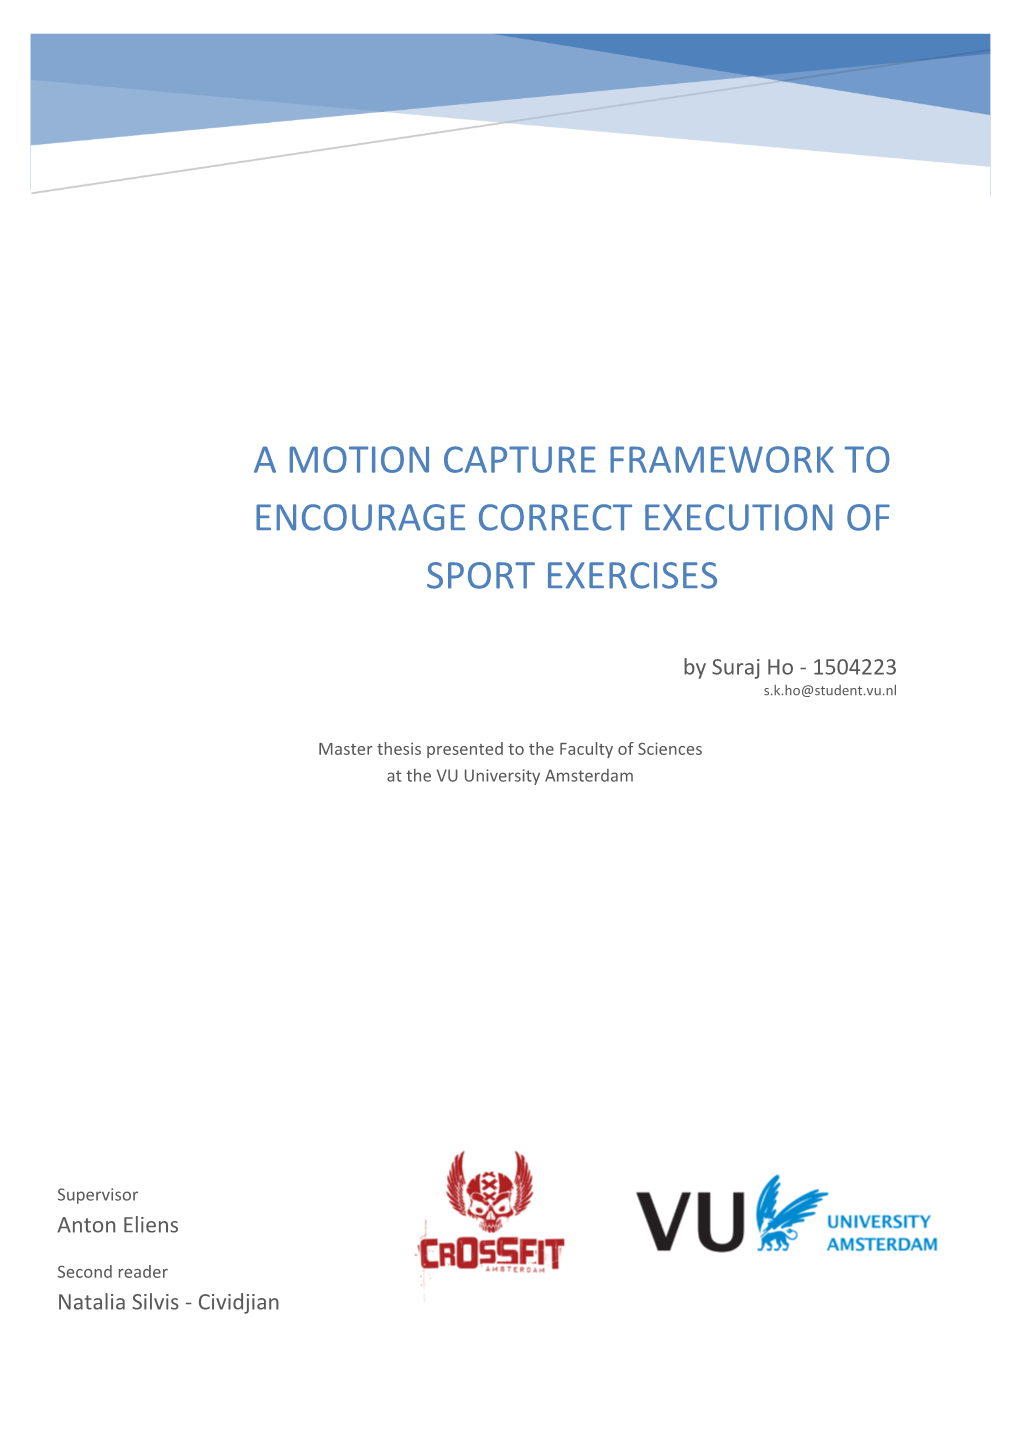 A Motion Capture Framework to Encourage Correct Execution of Sport Exercises